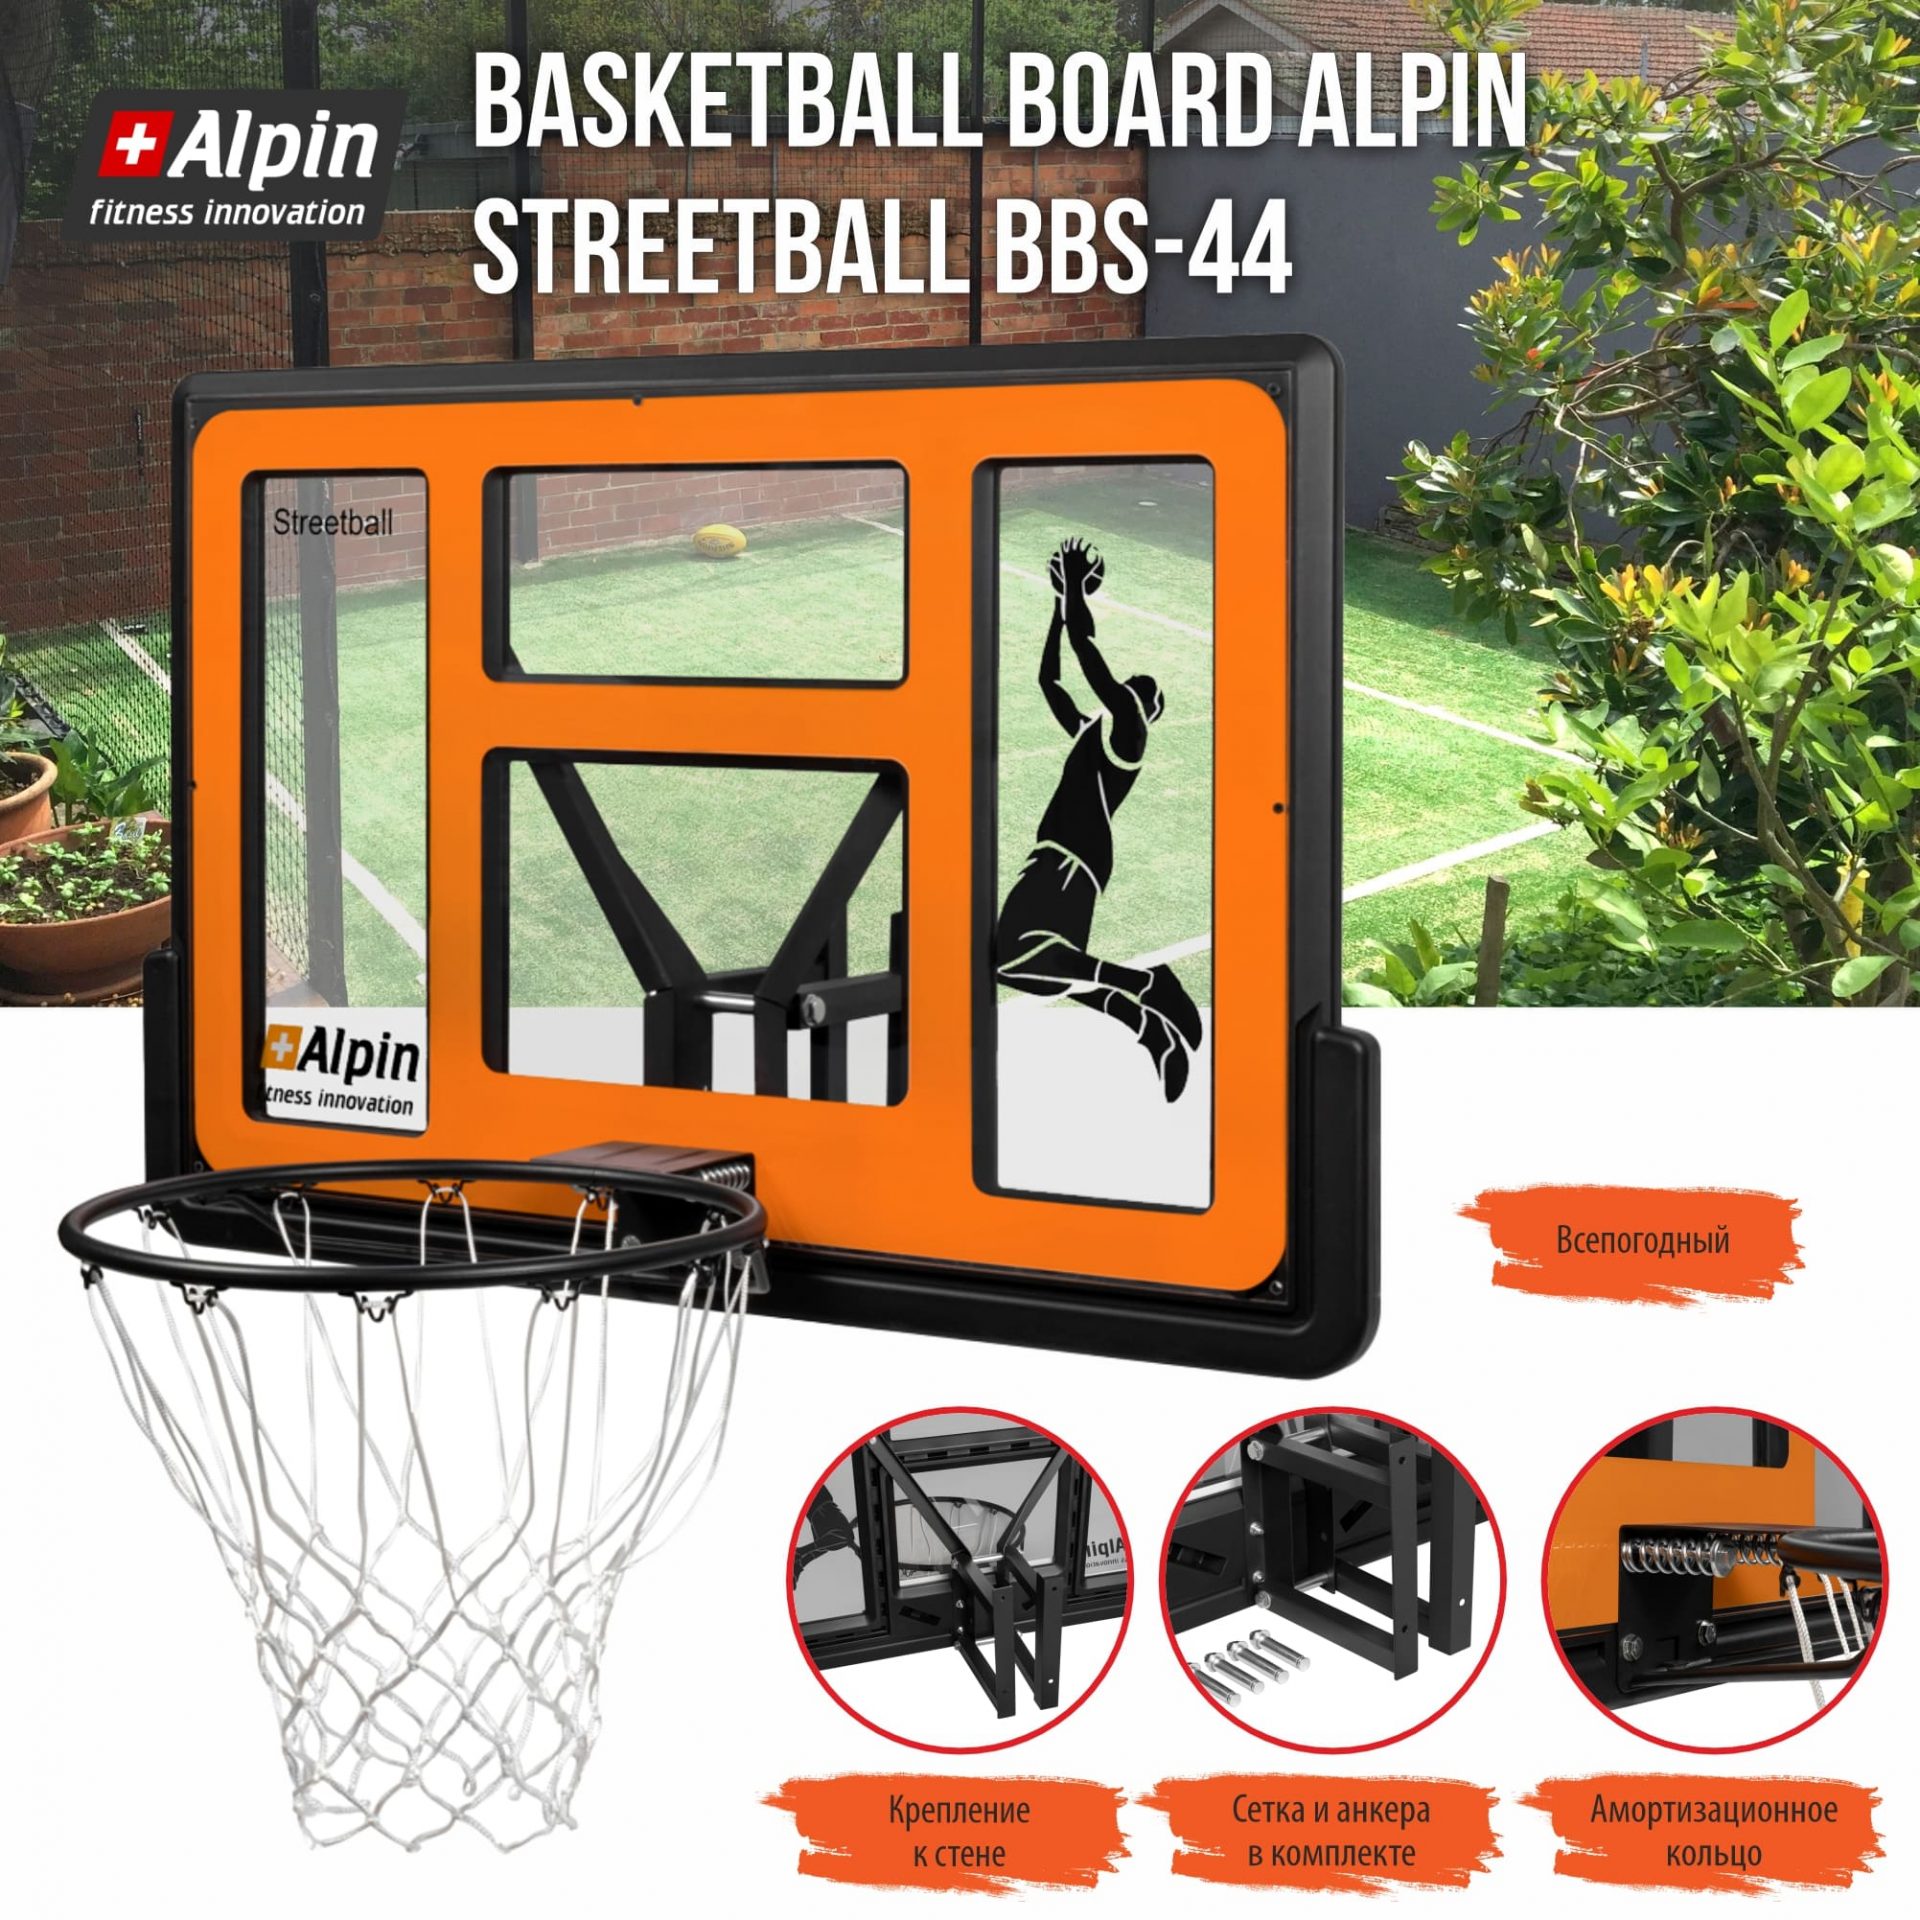 basketball board alpin streetball bbs 44